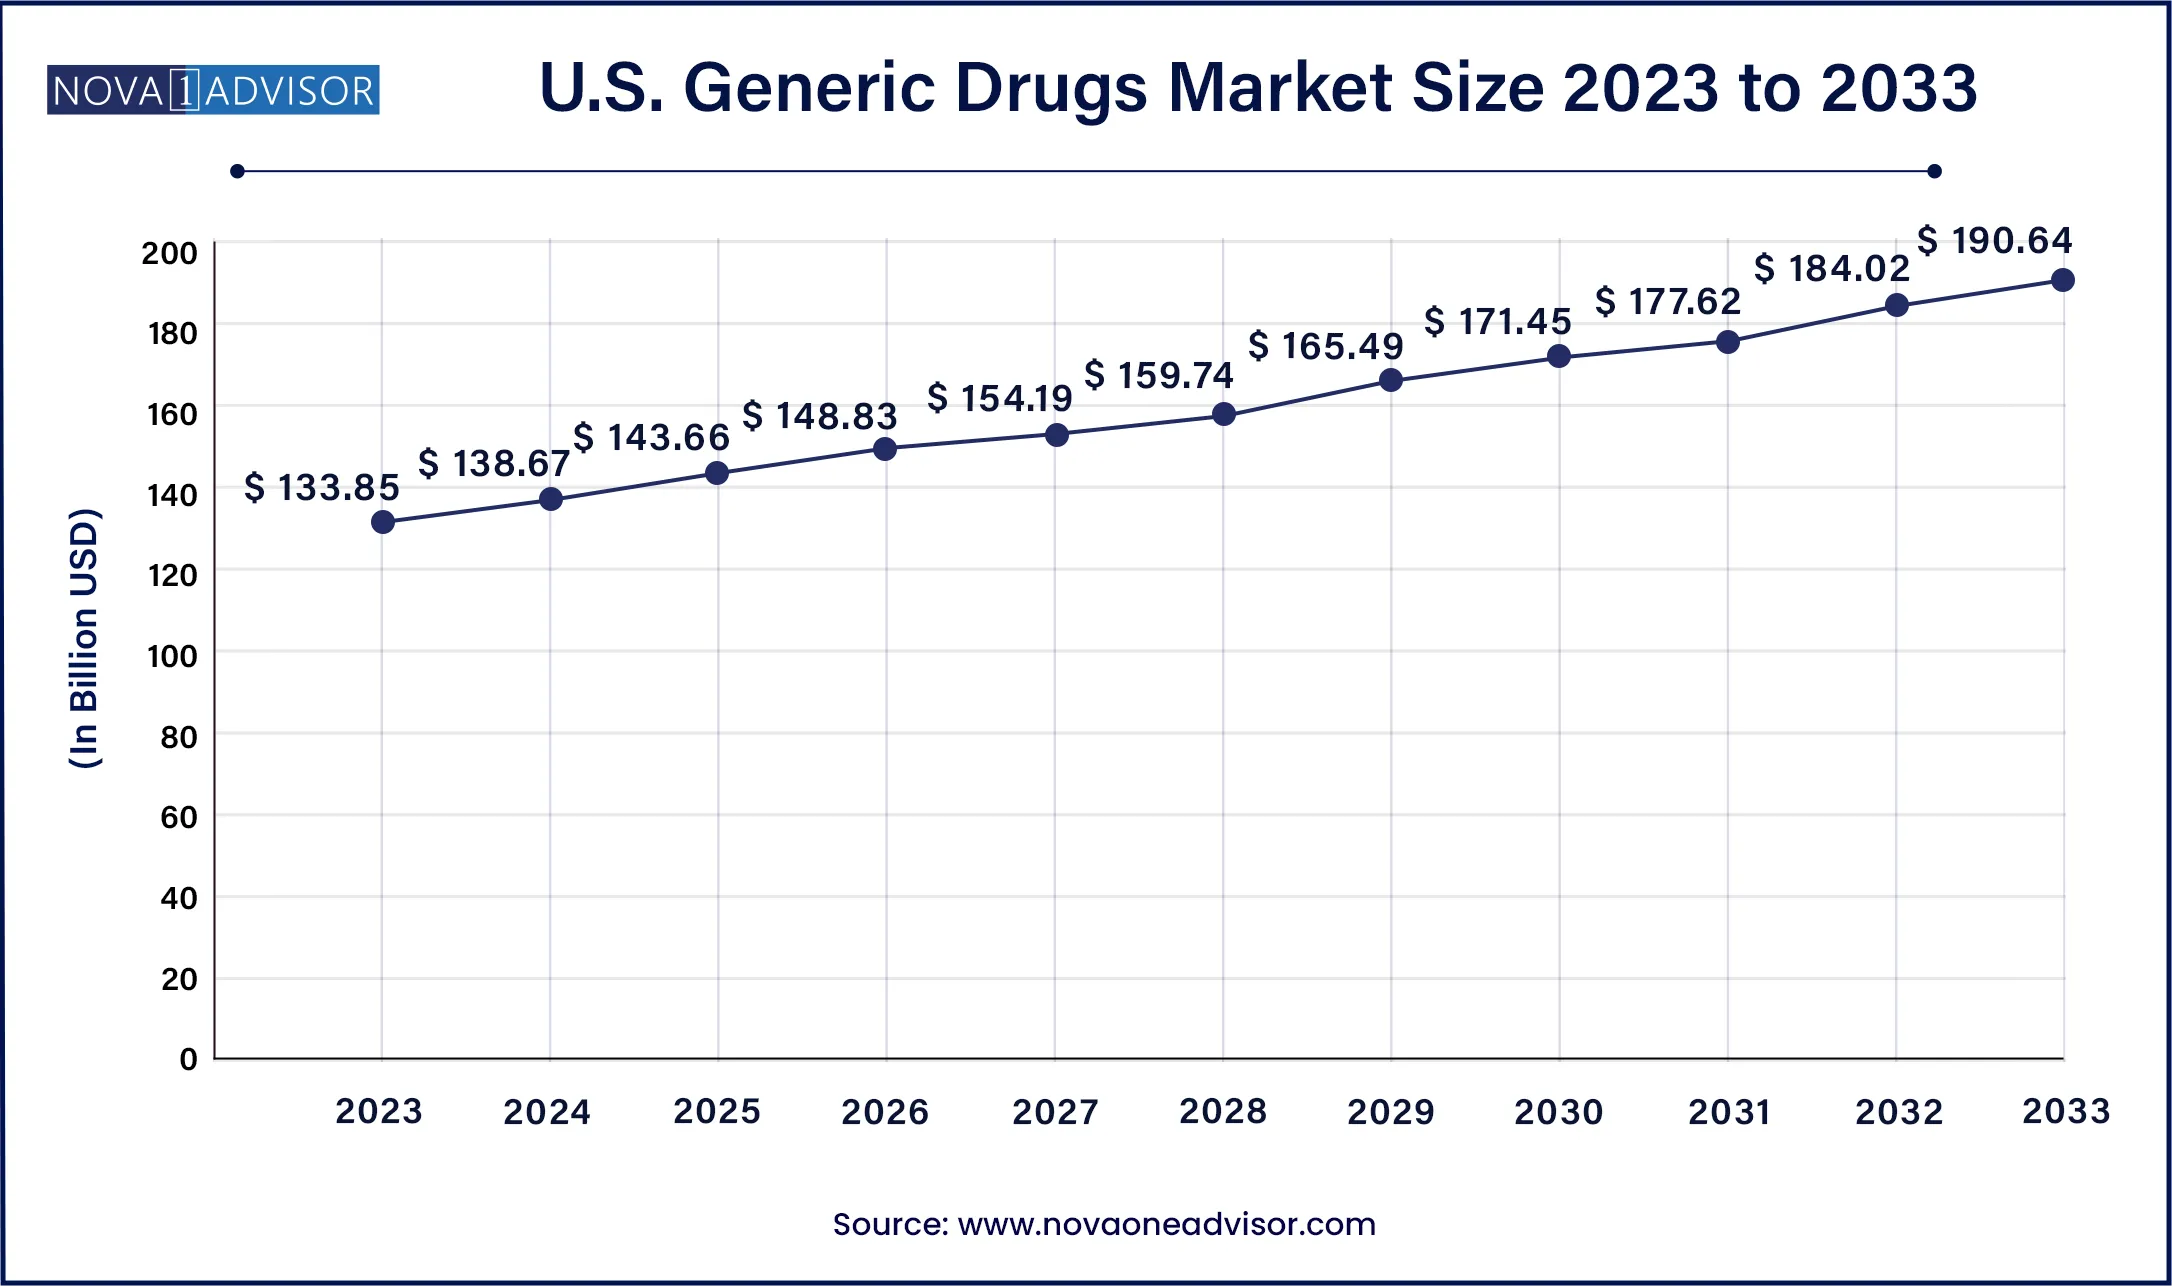 U.S. Generic Drugs Market Size, 2024 to 2033